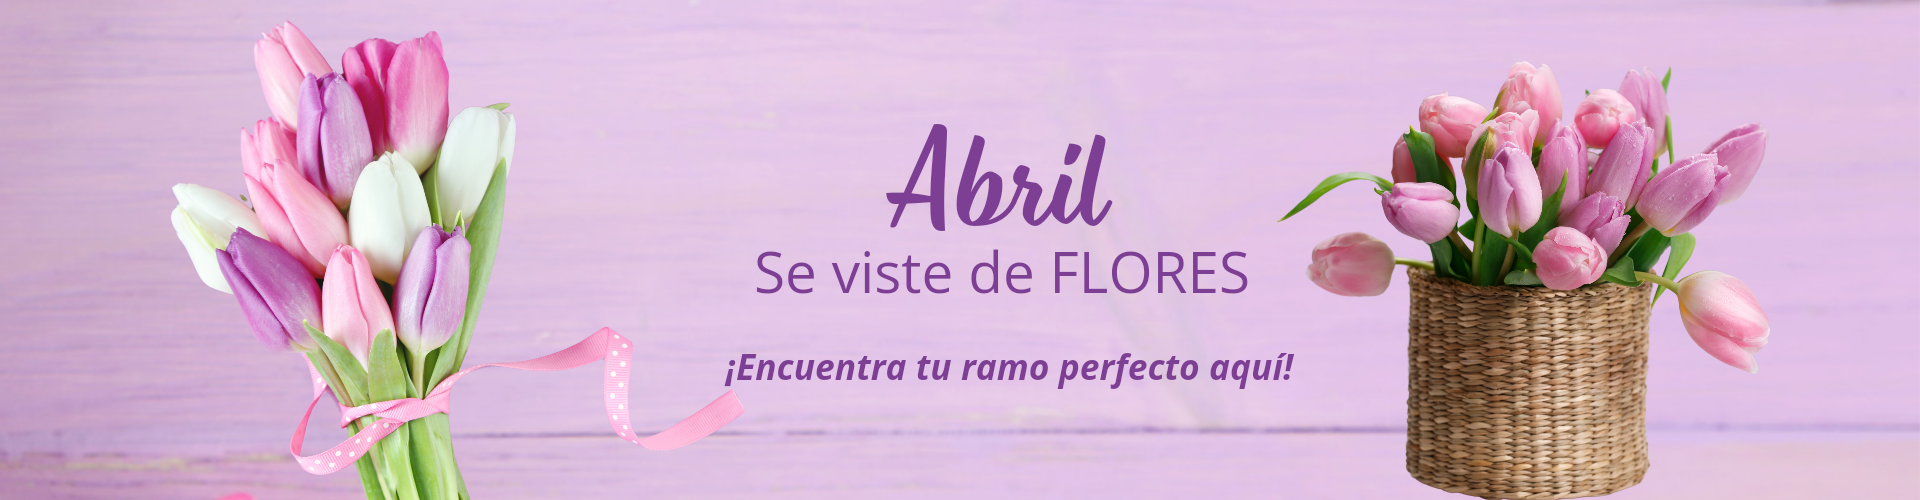 Envia flores a domicilio en Bogotá